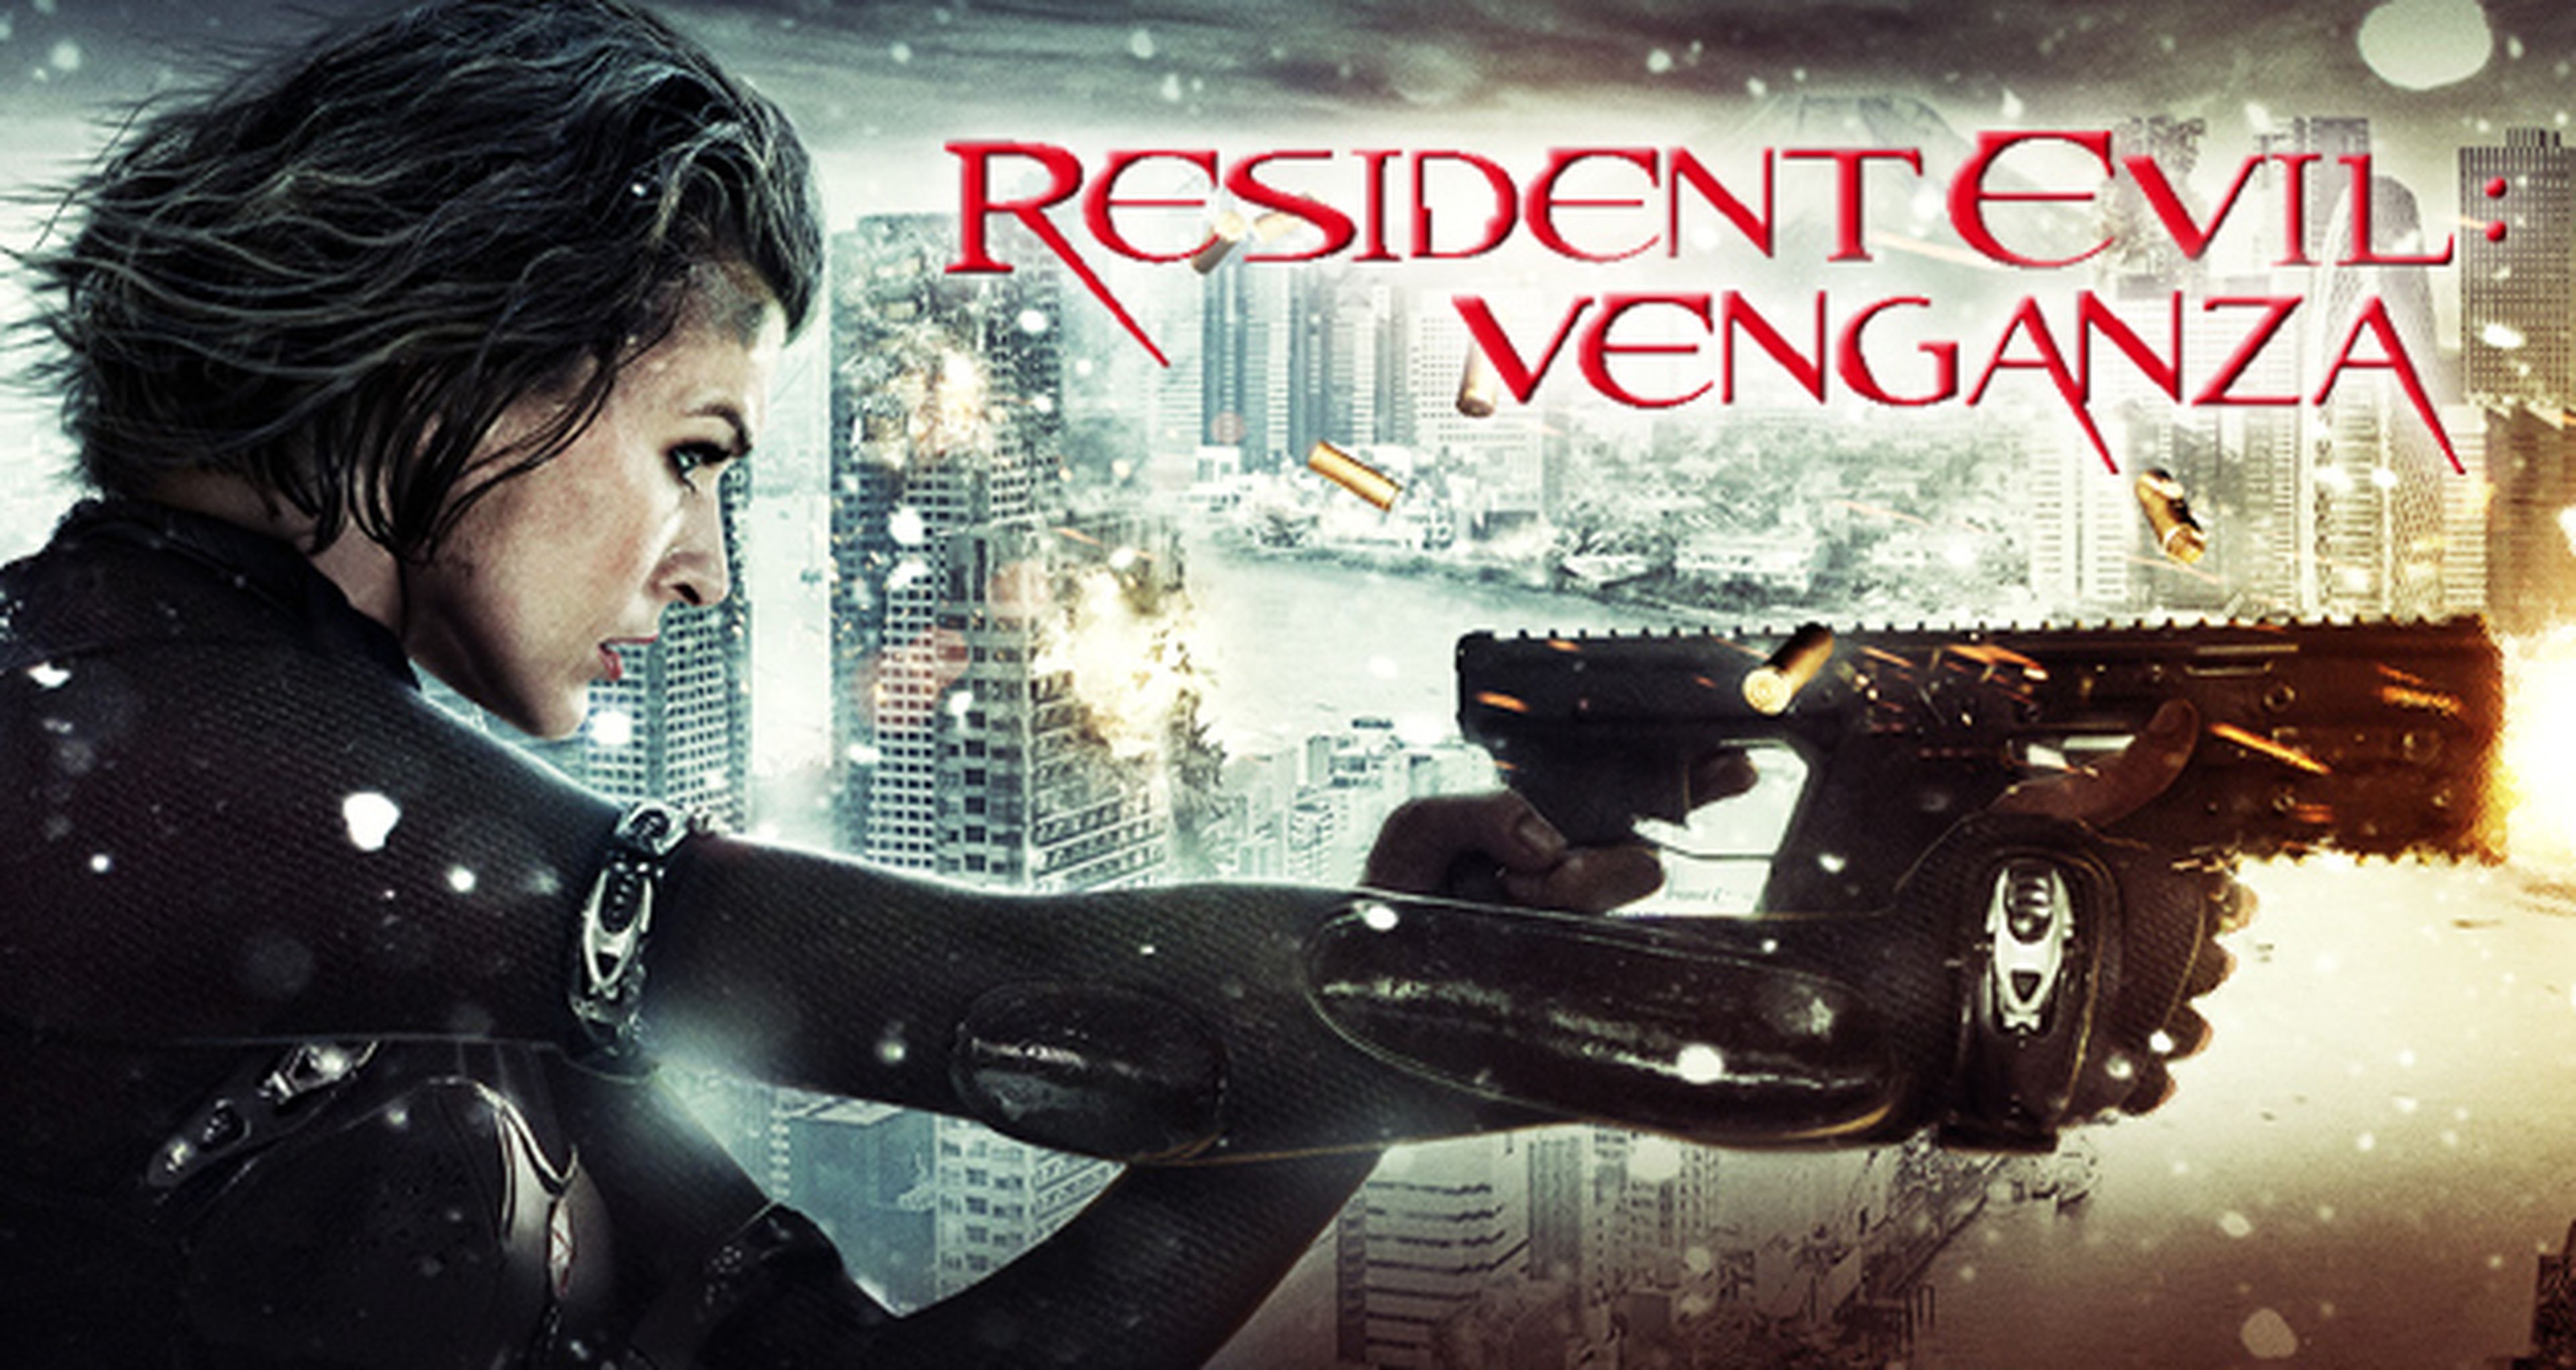 Del juego al cine: Resident Evil Venganza